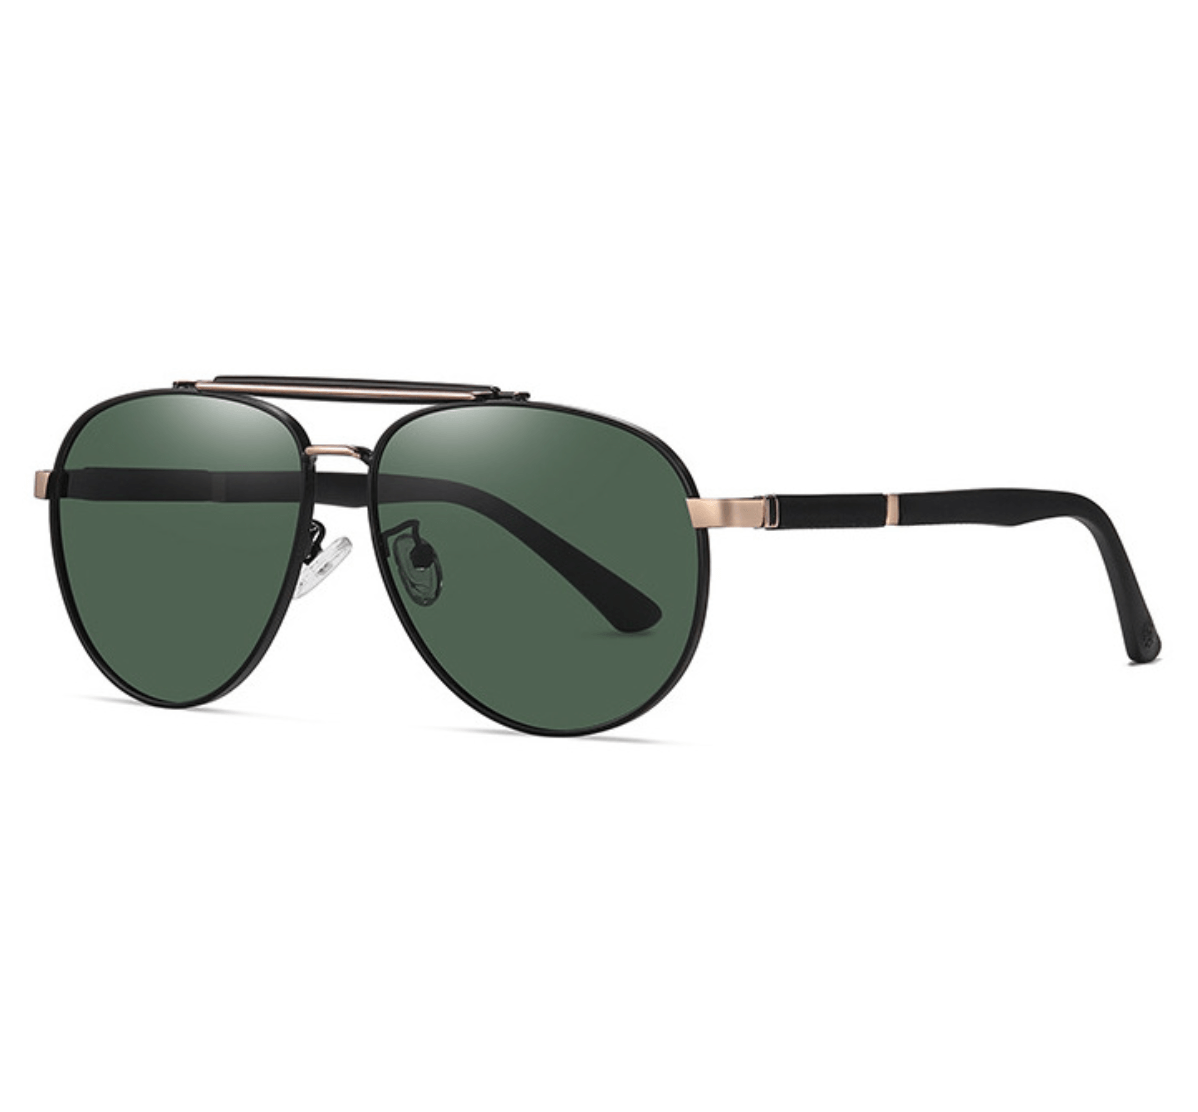 circle aviator sunglasses, wholesale bulk sunglasses, wholesale round sunglasses, wholesale shades sunglasses, sunglasses supplier